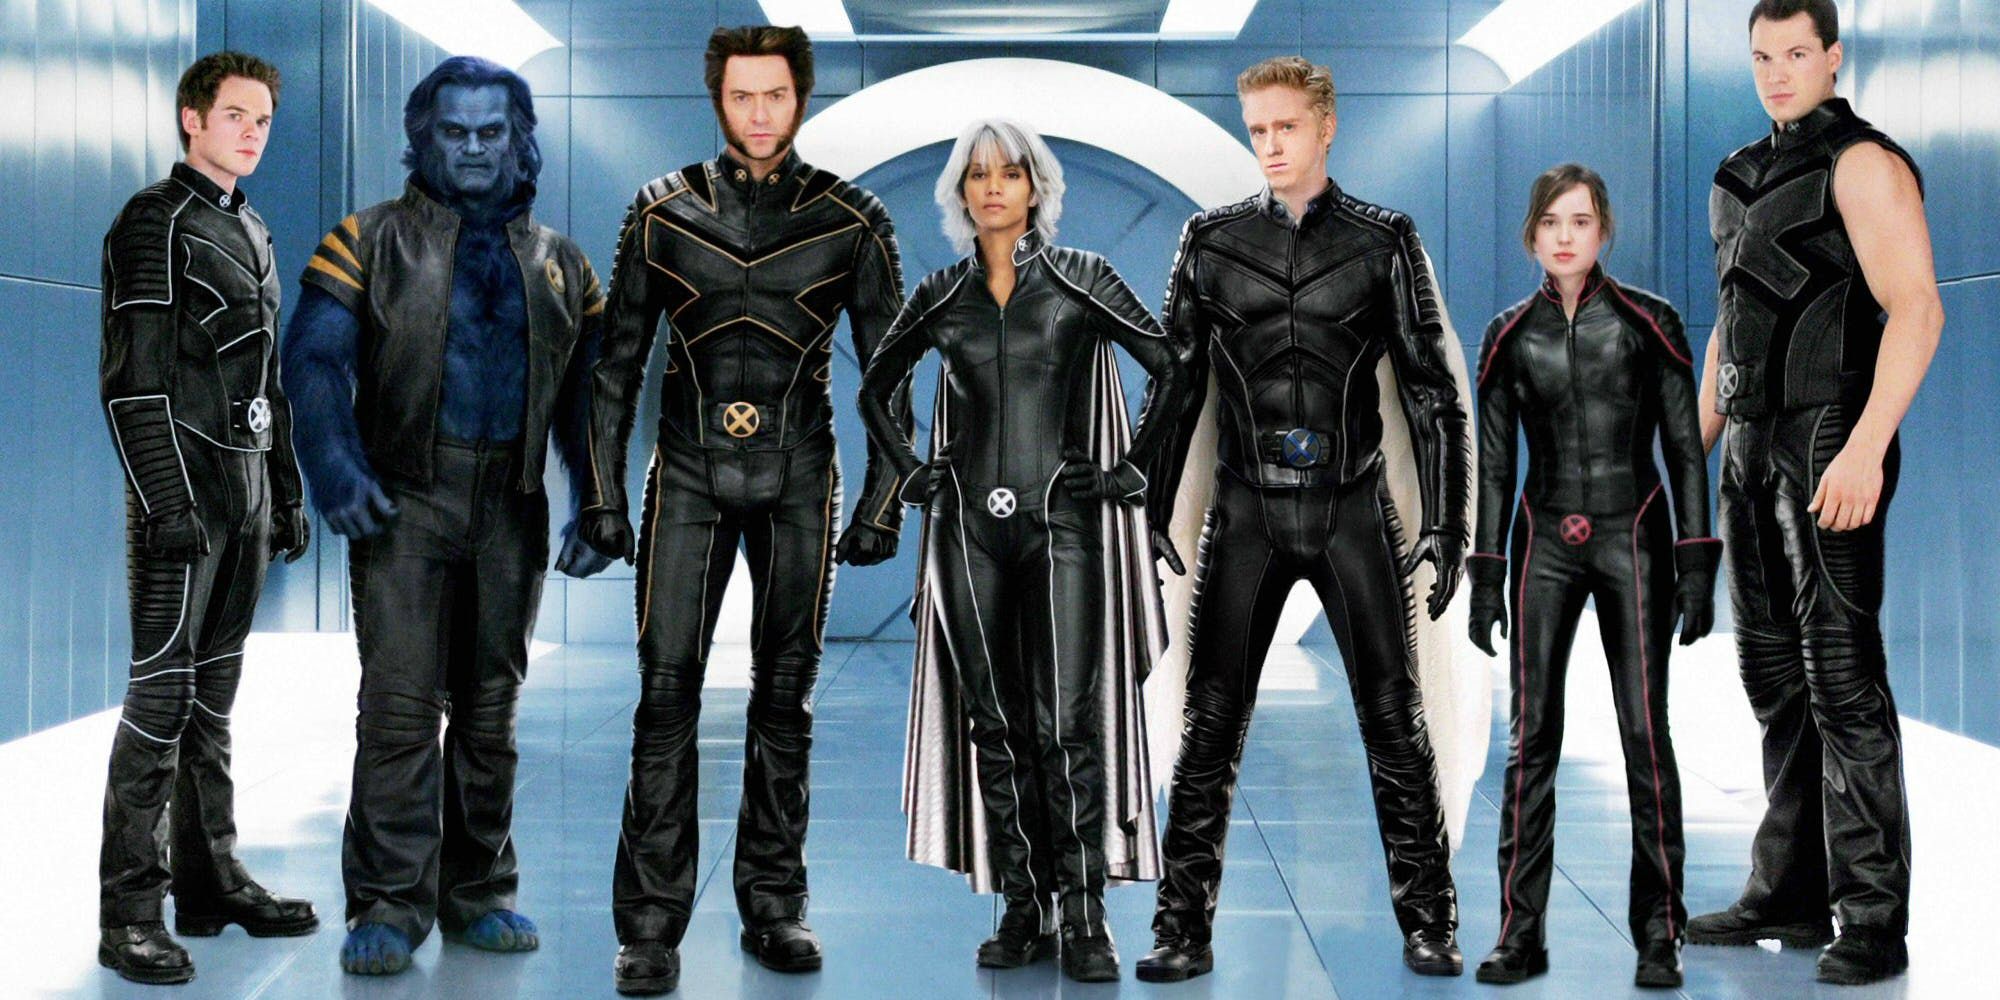 X-Men The Last Stand team